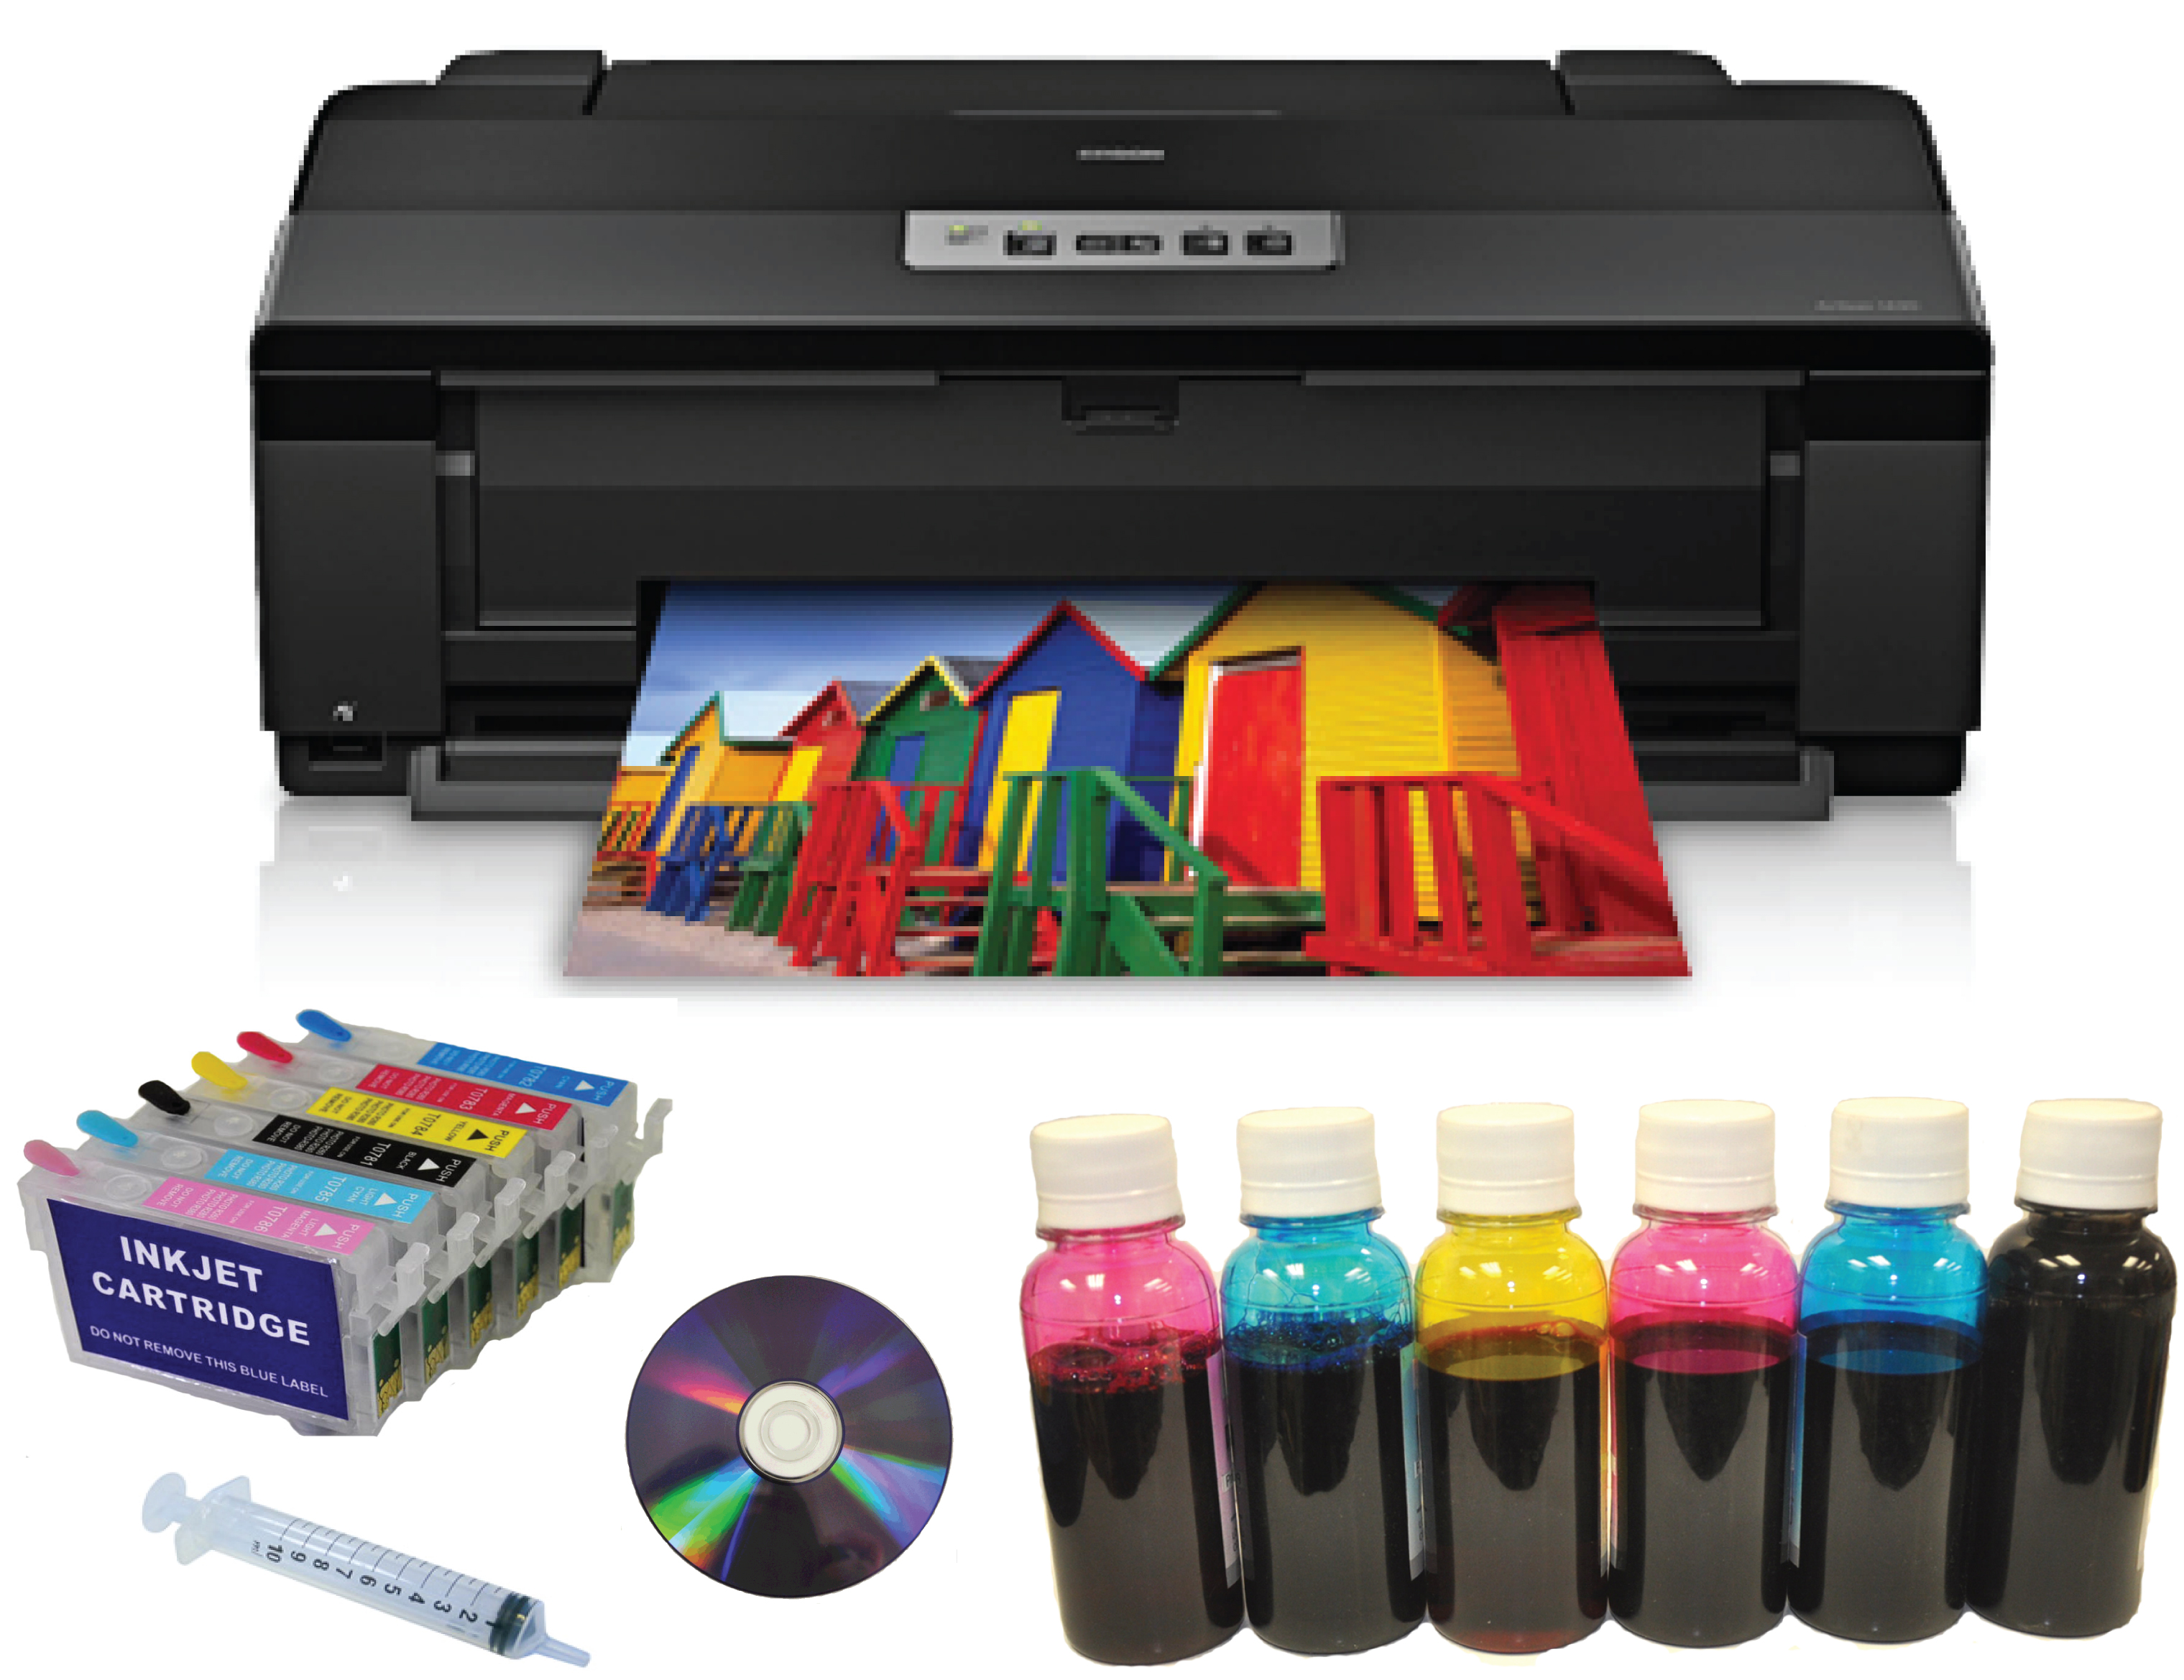 Картинка цветная для принтера. Принтер Epson Artisan 1430. Epson l1300 картридж. Принтер Epson l1300 картриджи. Лазерный принтер цветной Epson l222.